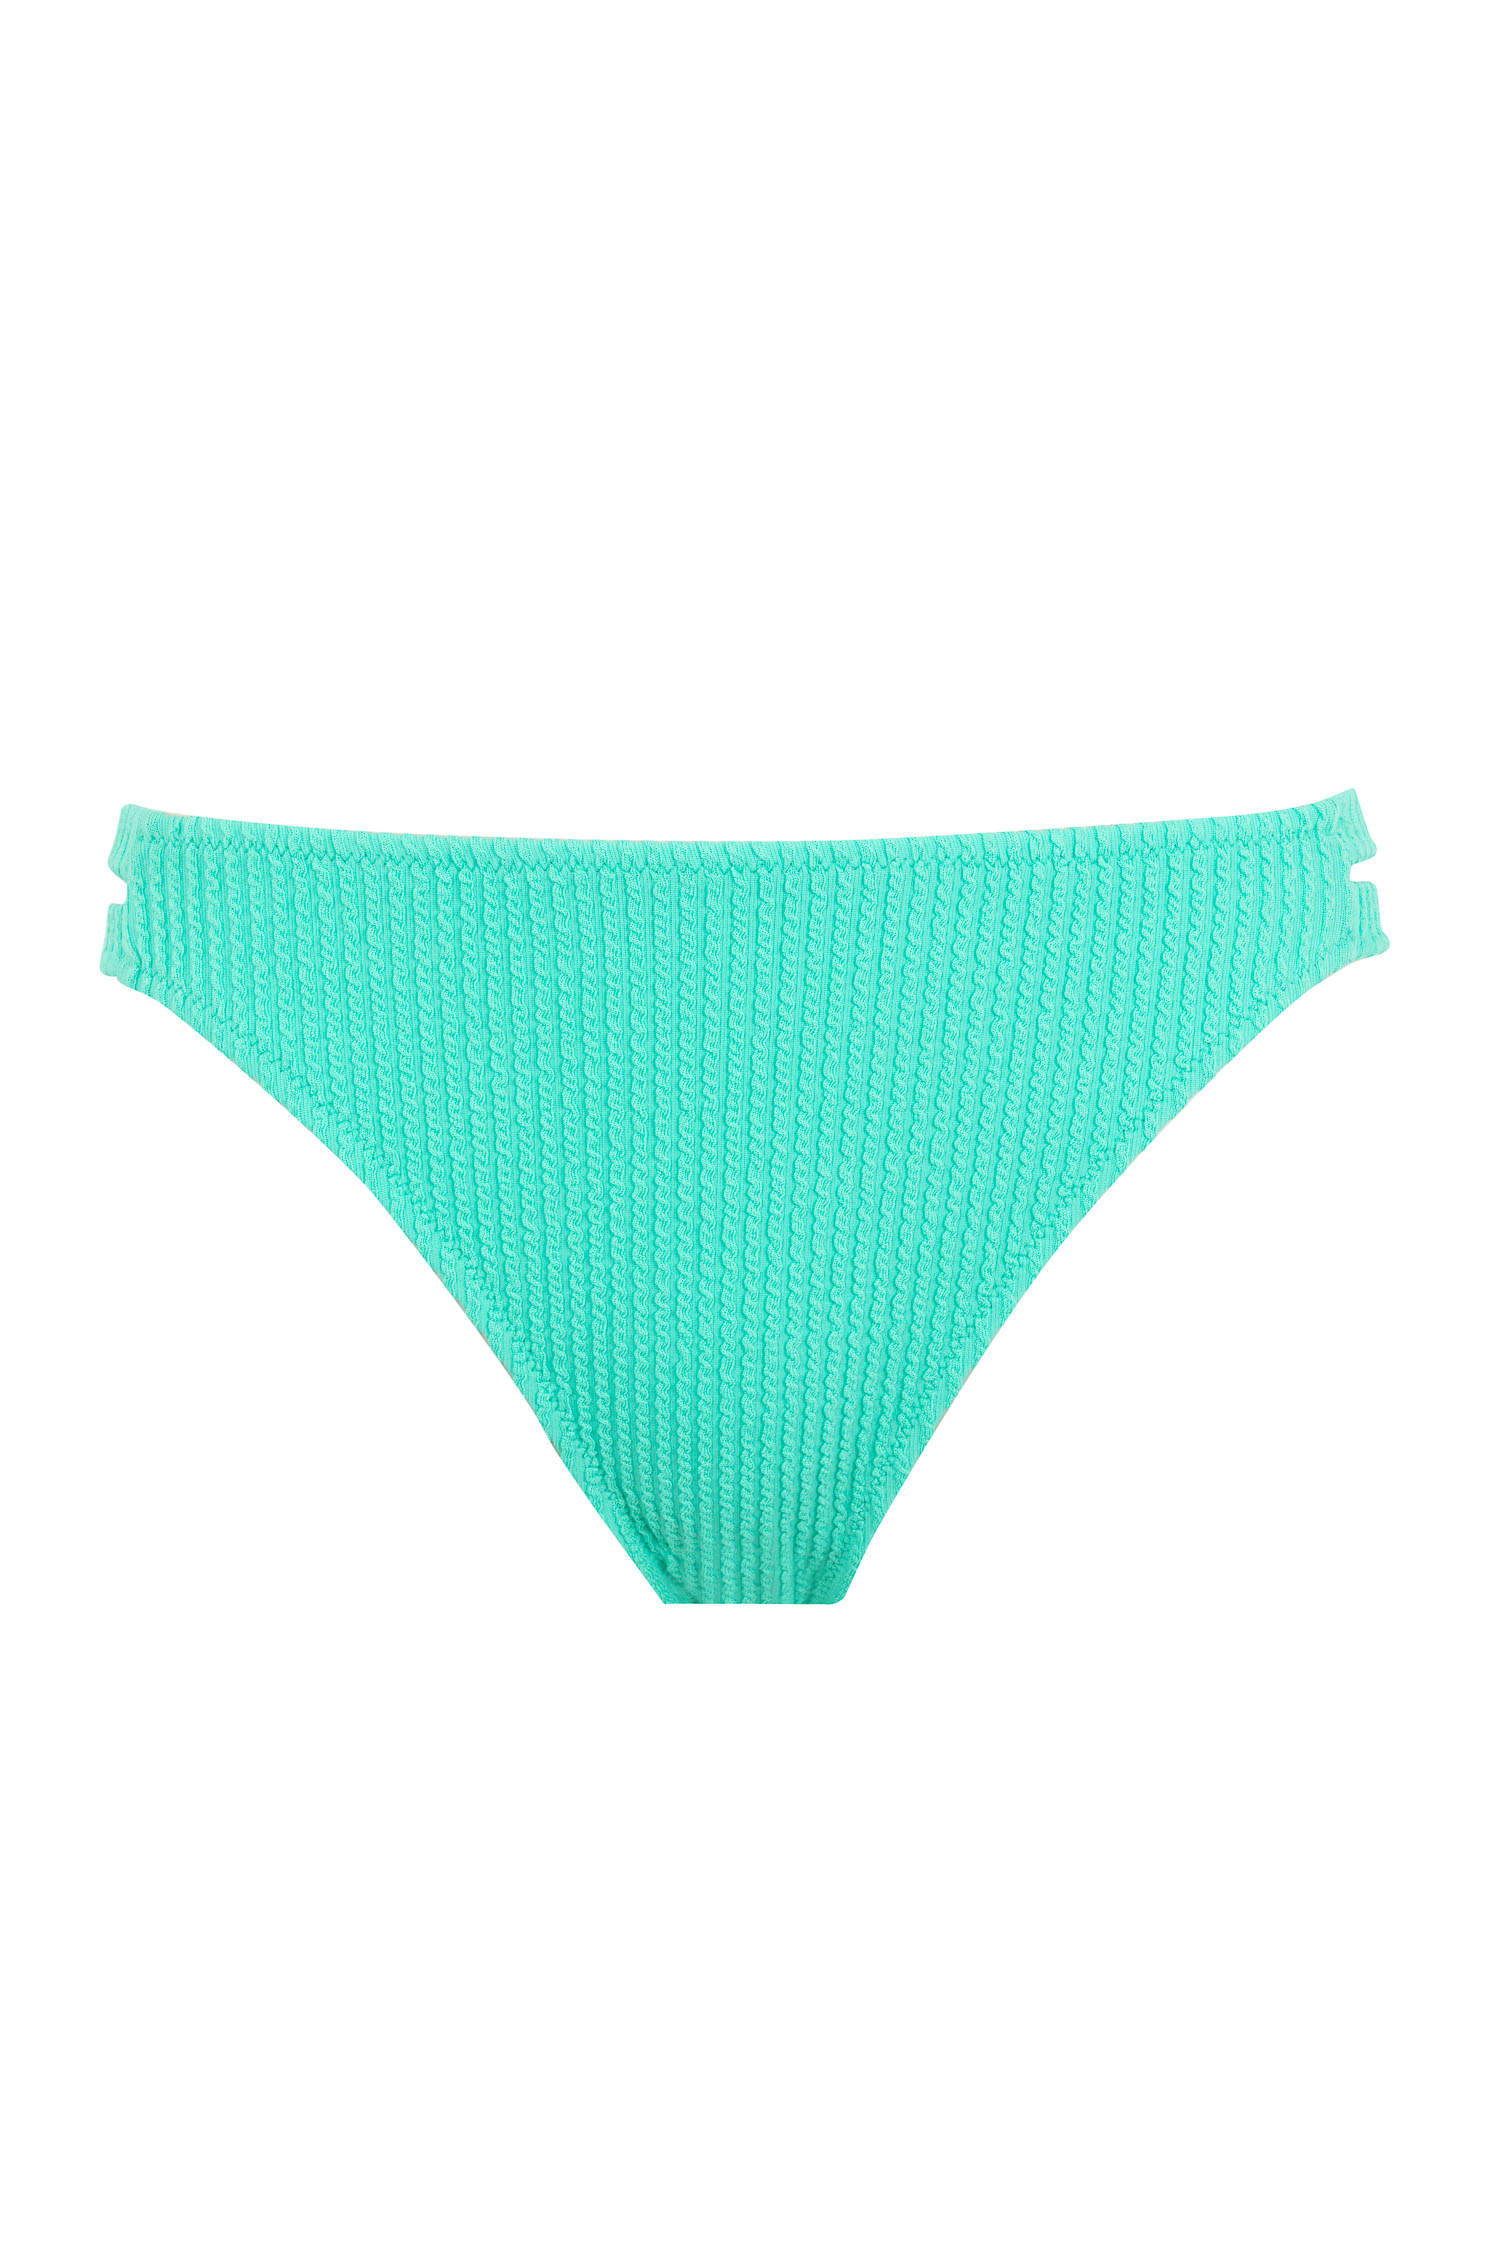 Green WOMEN Regular Fit Bikini Bottom 2857930 | DeFacto